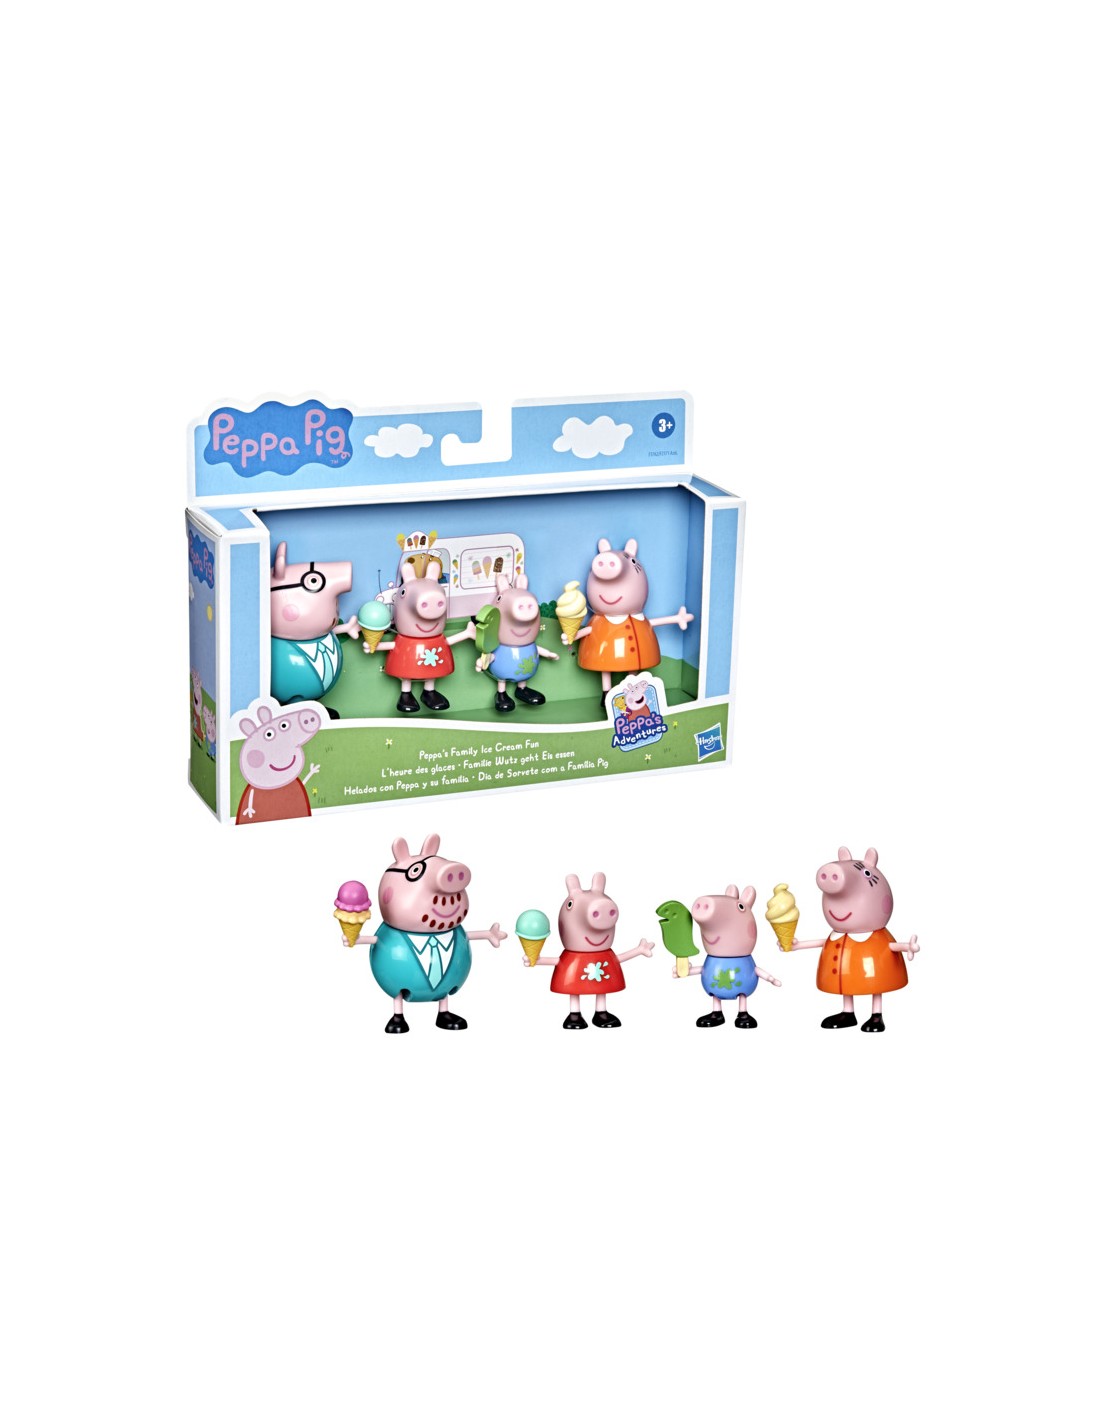 Peppa Pig Figuras De Dibujos Animados Juguetes Regalo Famili